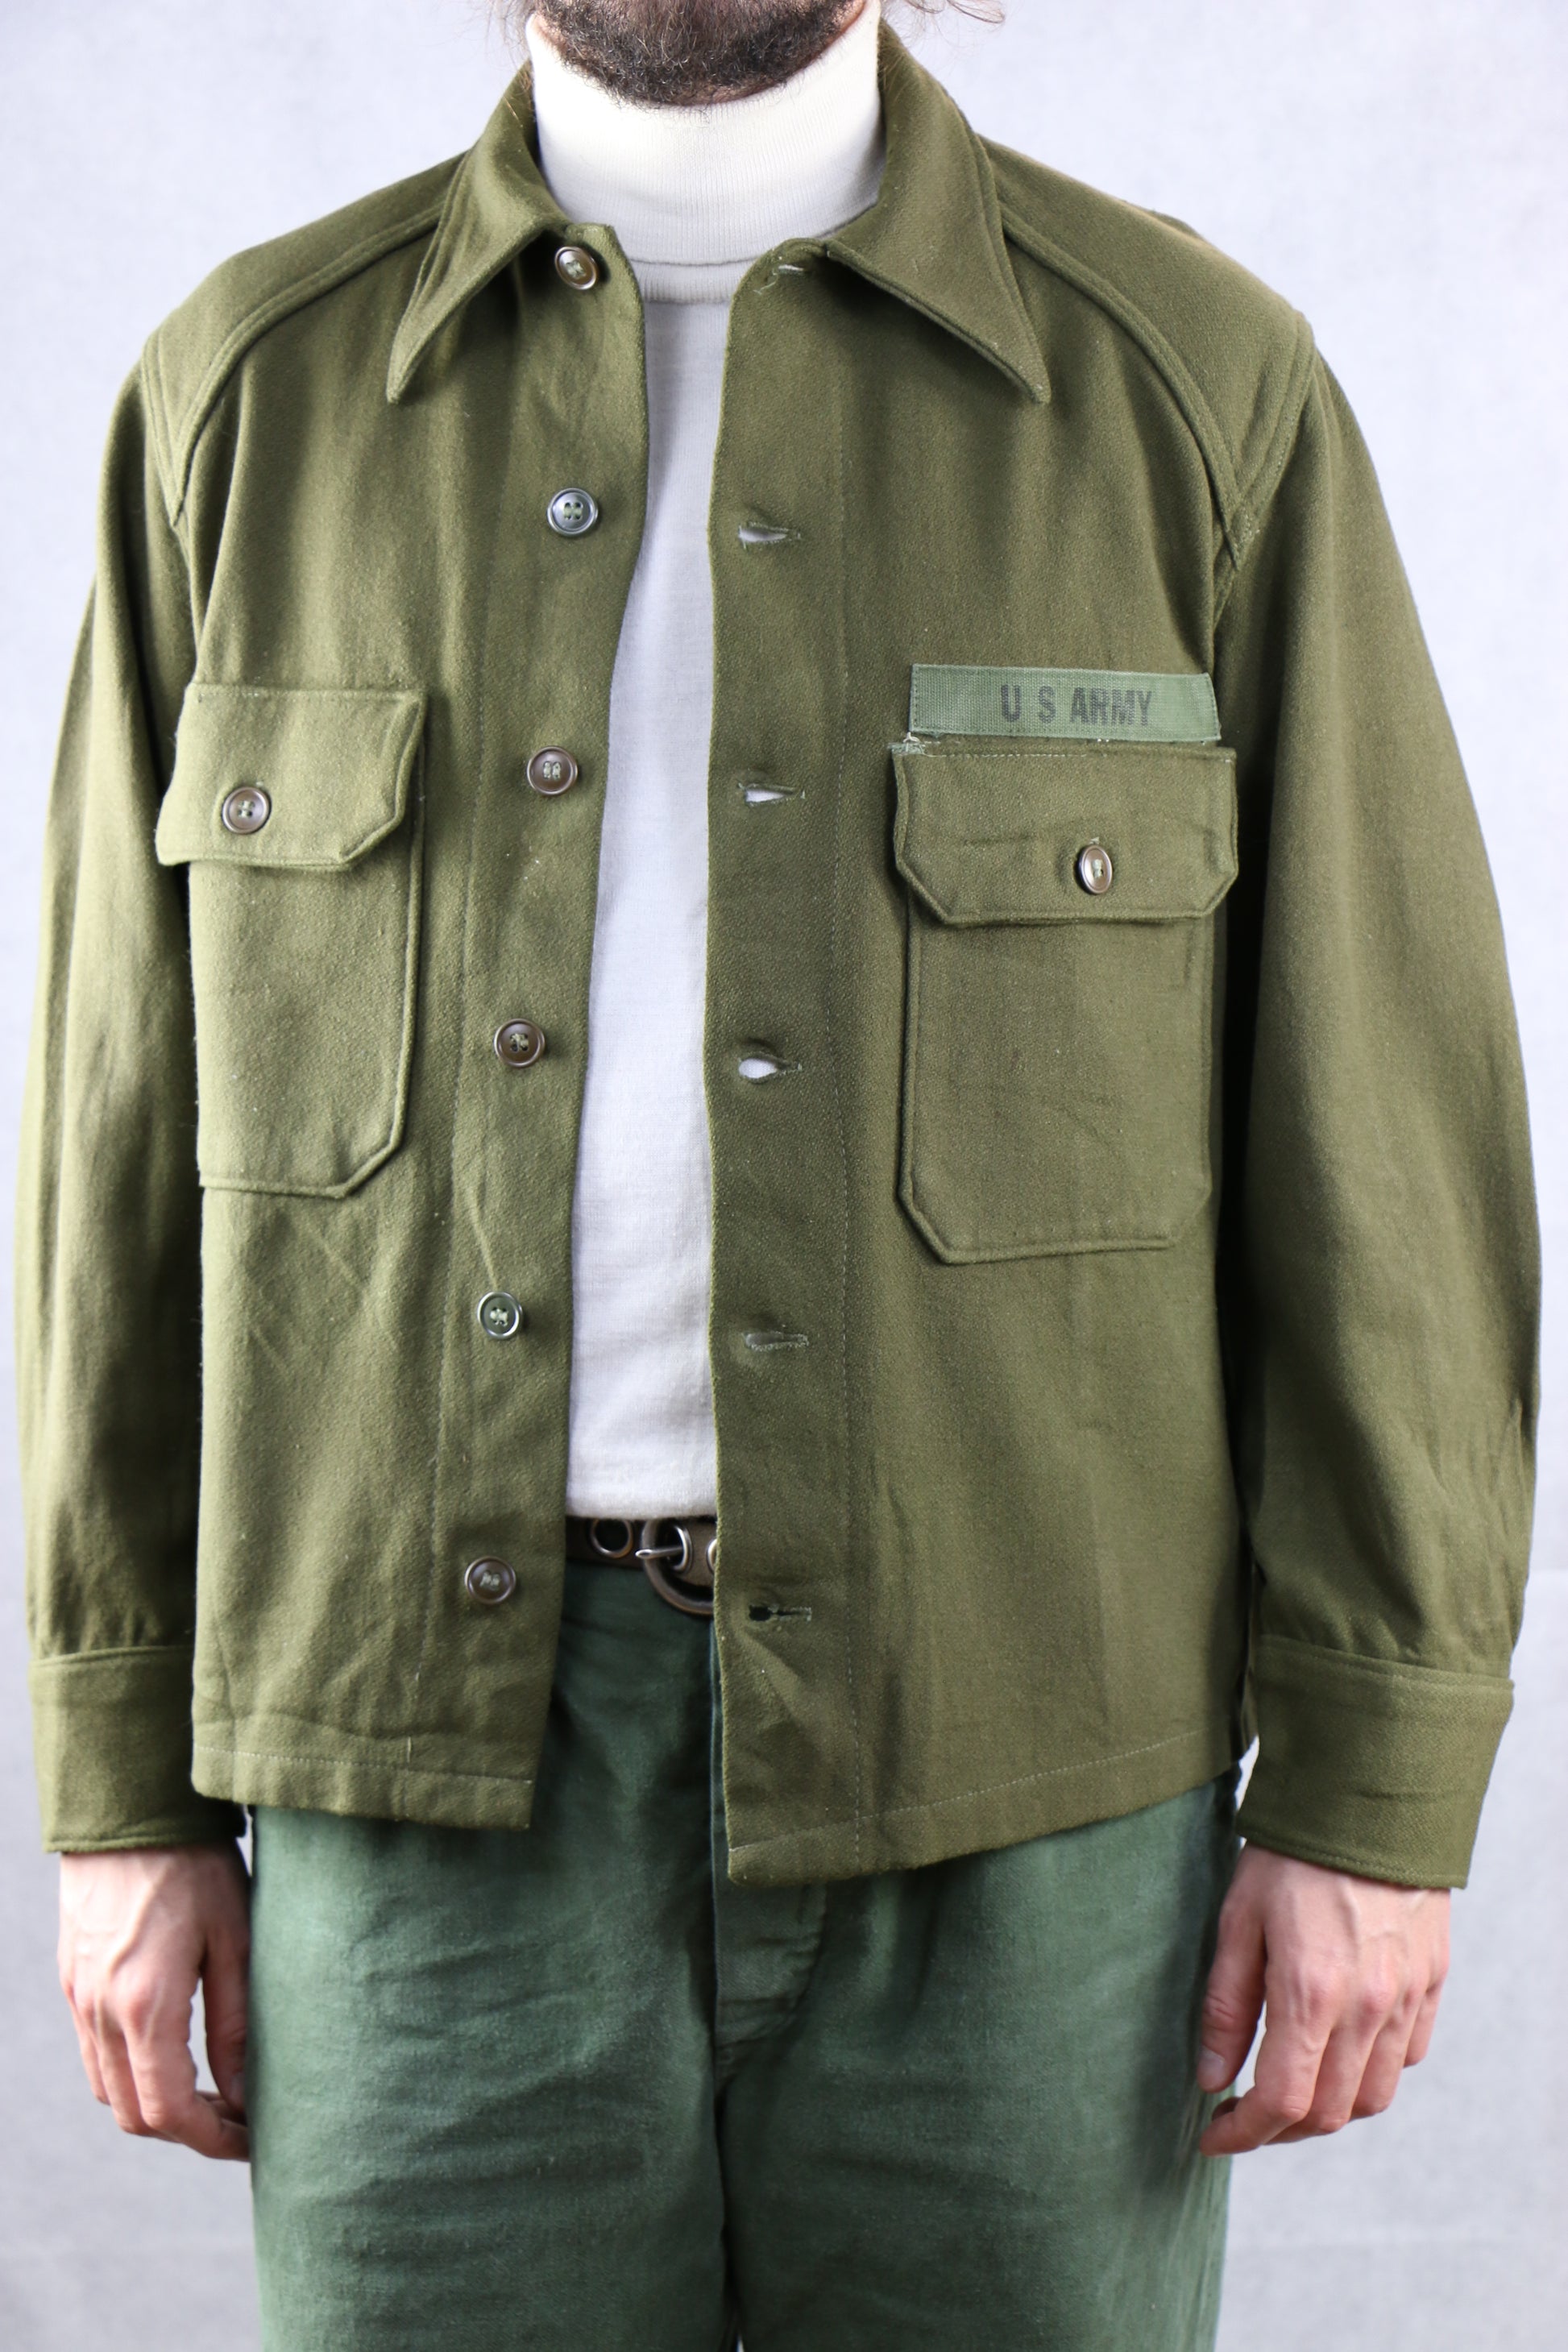 U.S. Army OG-108 Shirt - vintage clothing clochard92.com